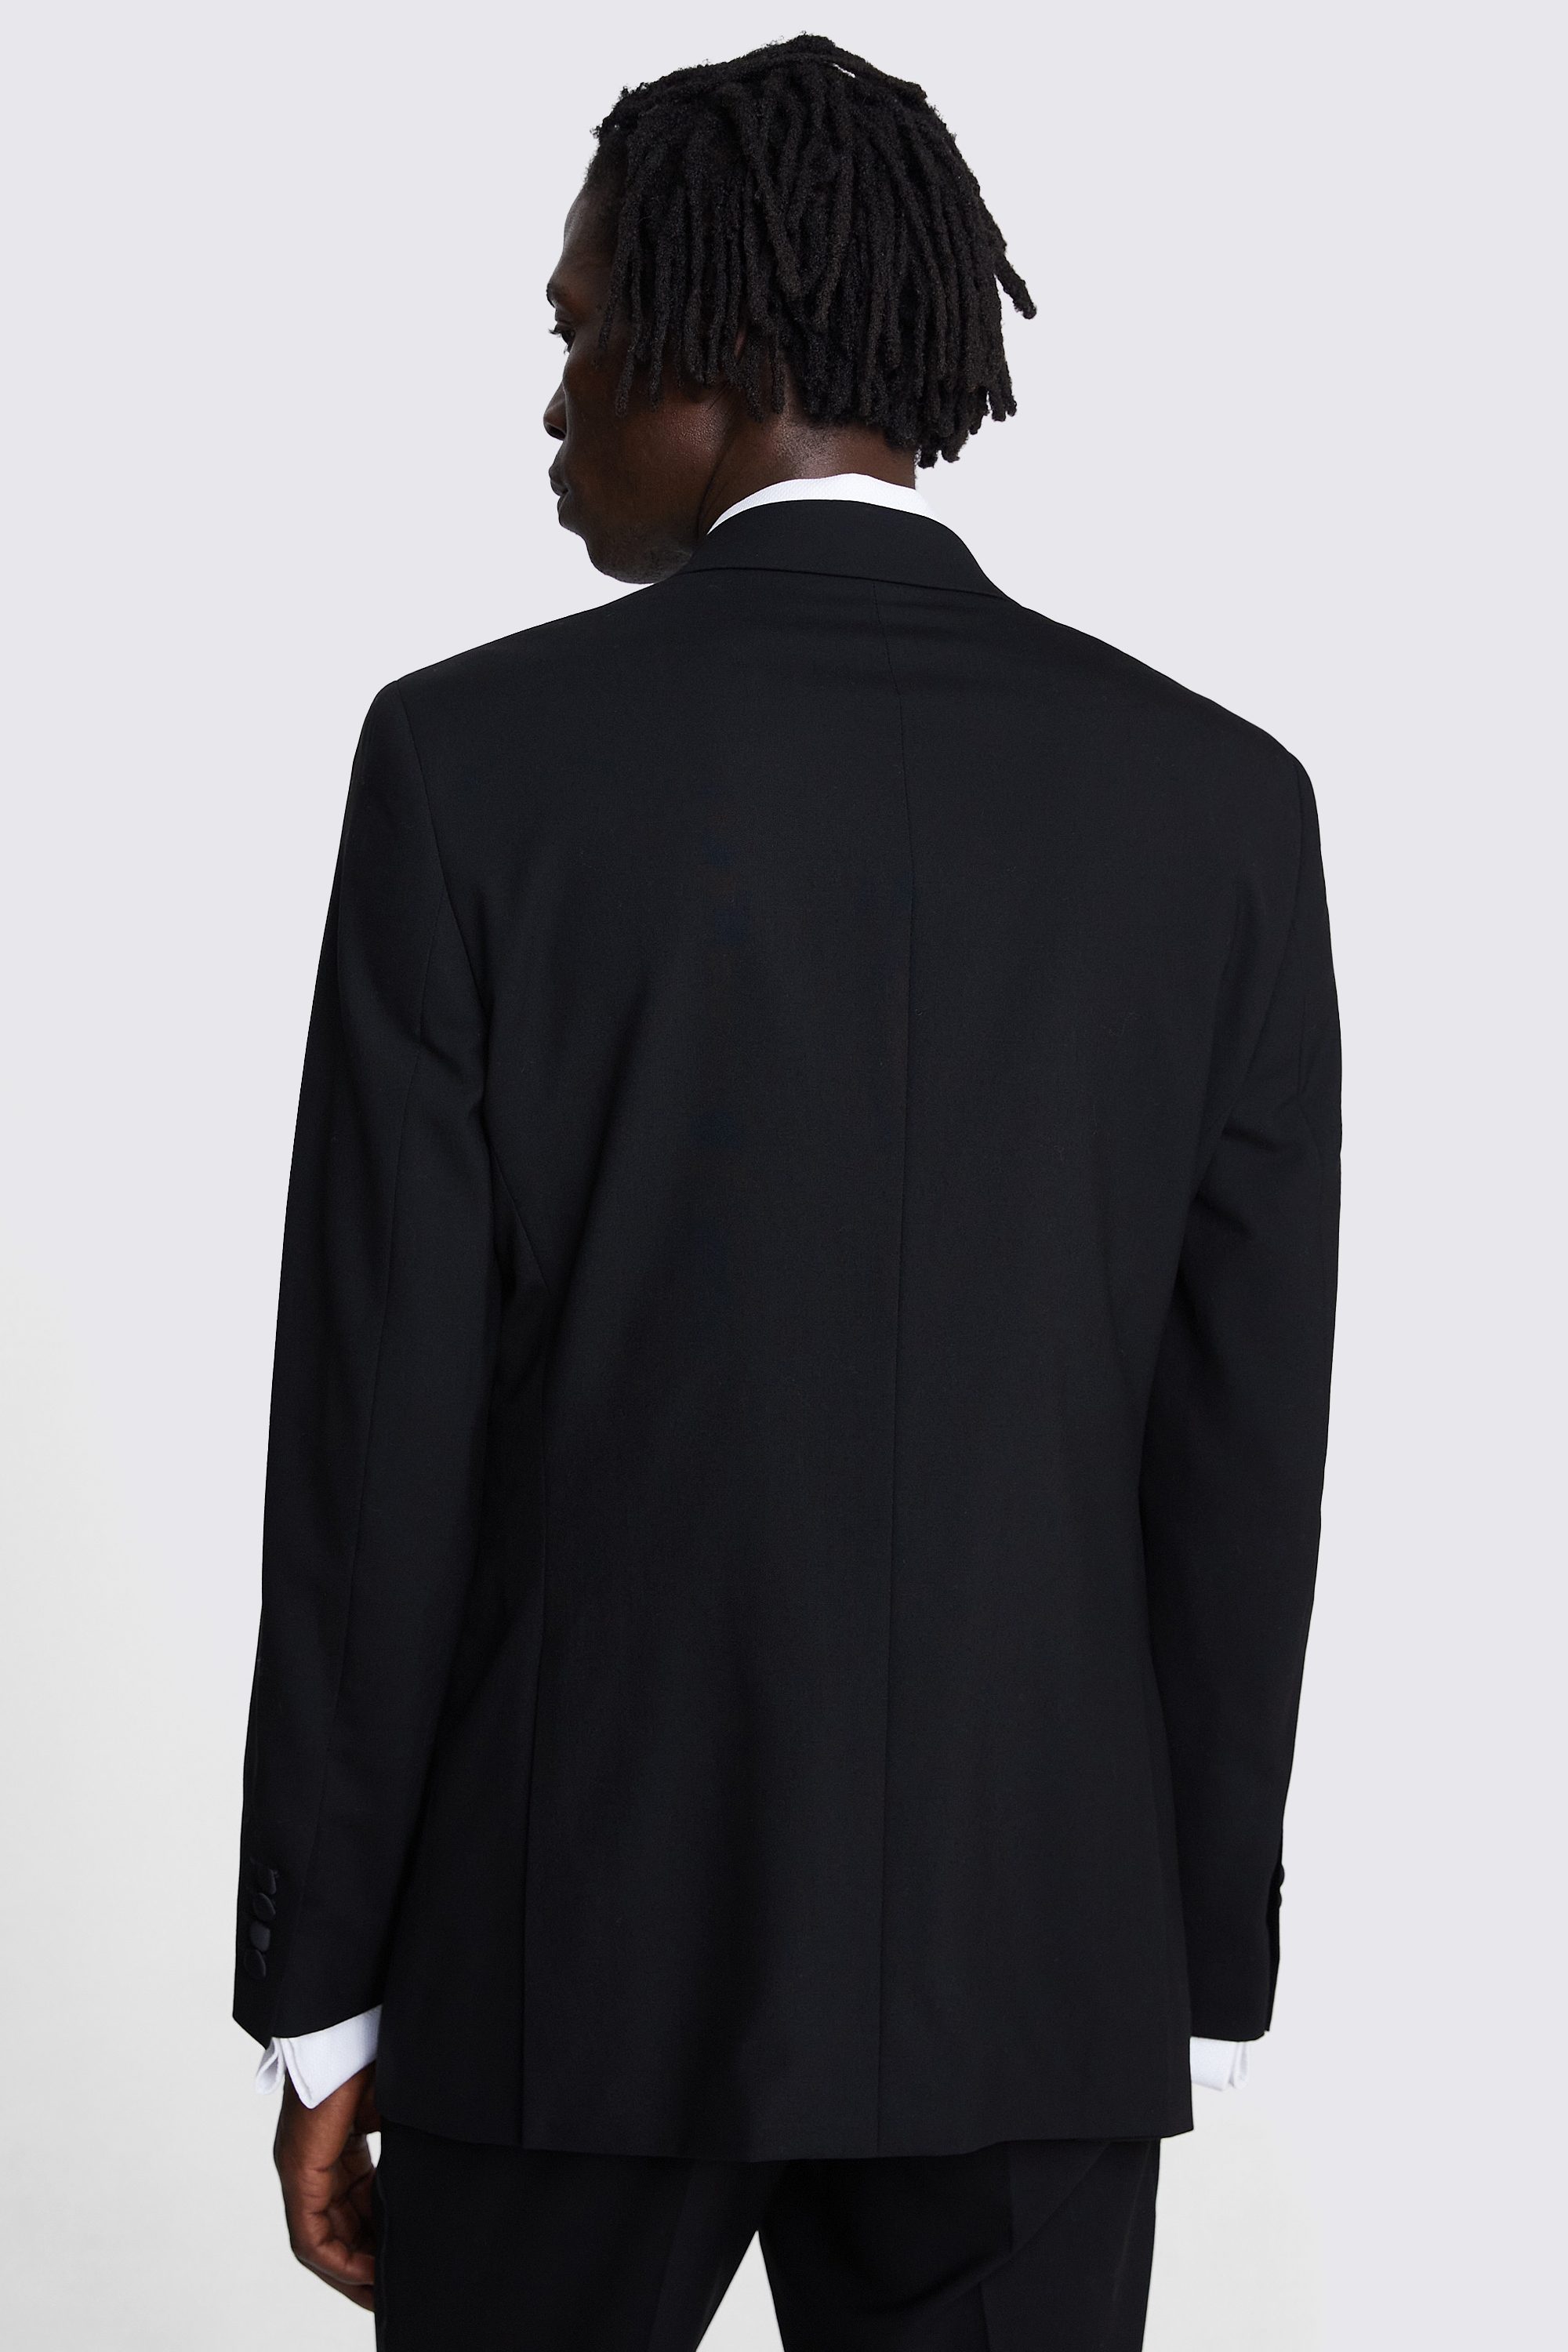 Tailored Fit Black Peak Lapel Tuxedo Jacket | Buy Online at Moss